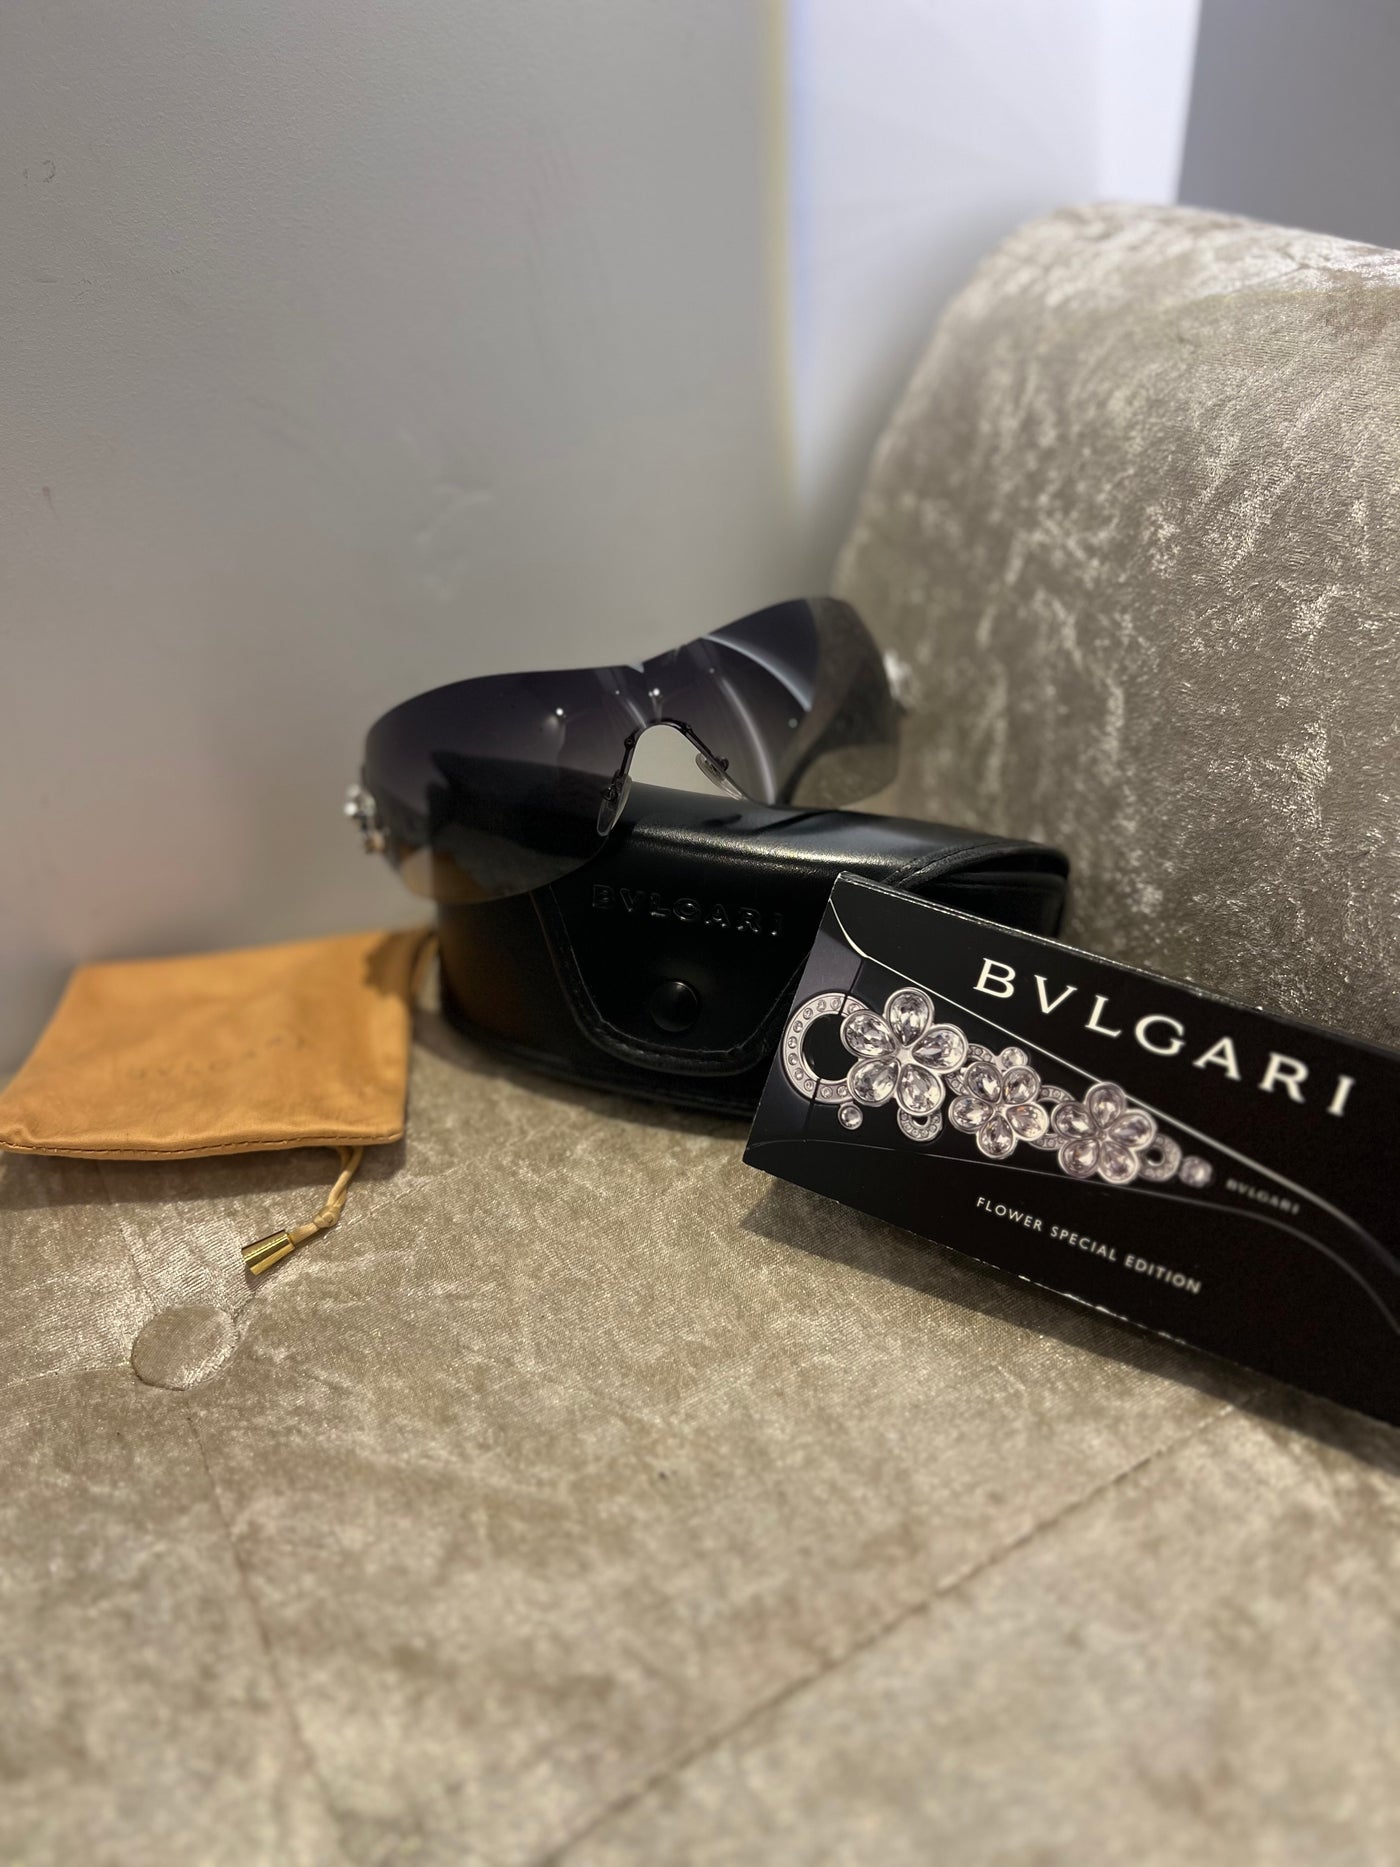 Bvlgari black limited edition sunglasses